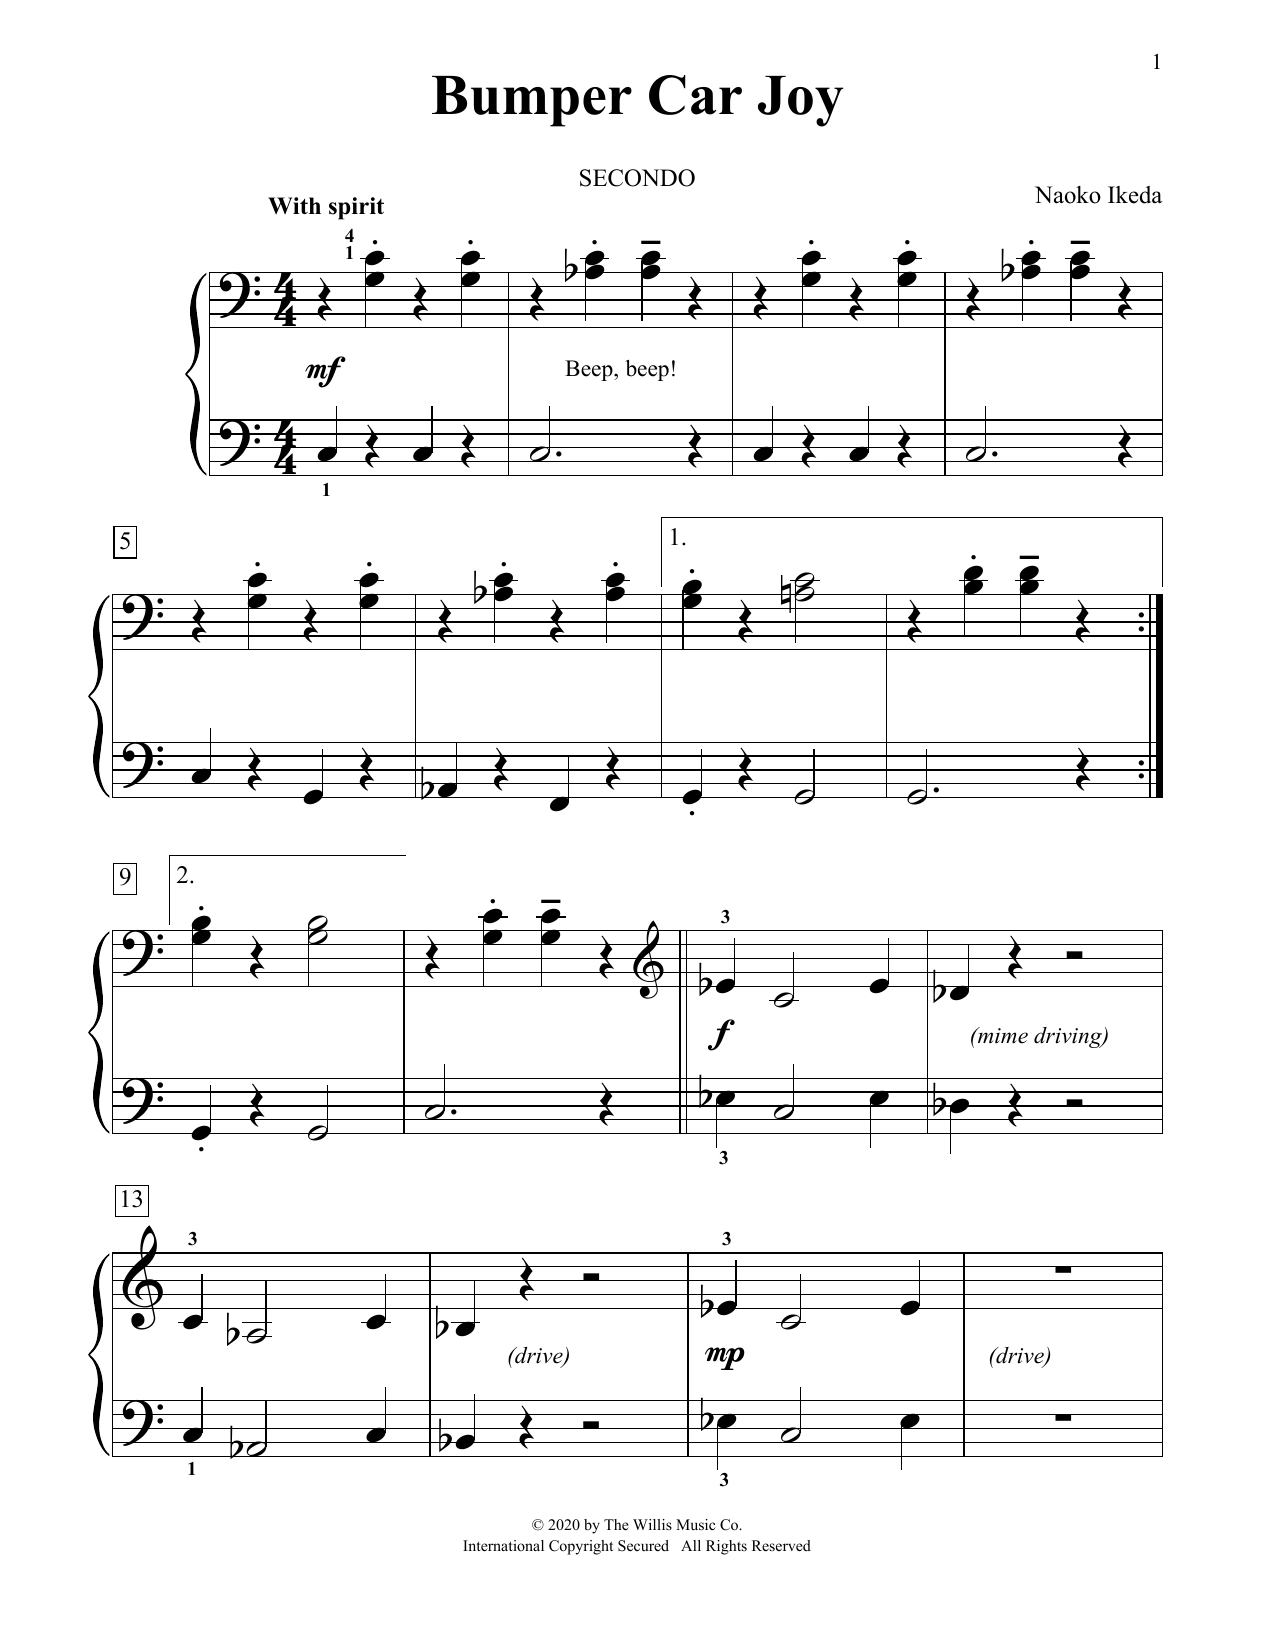 Naoko Ikeda Bumper Car Joy Sheet Music Notes & Chords for Piano Duet - Download or Print PDF